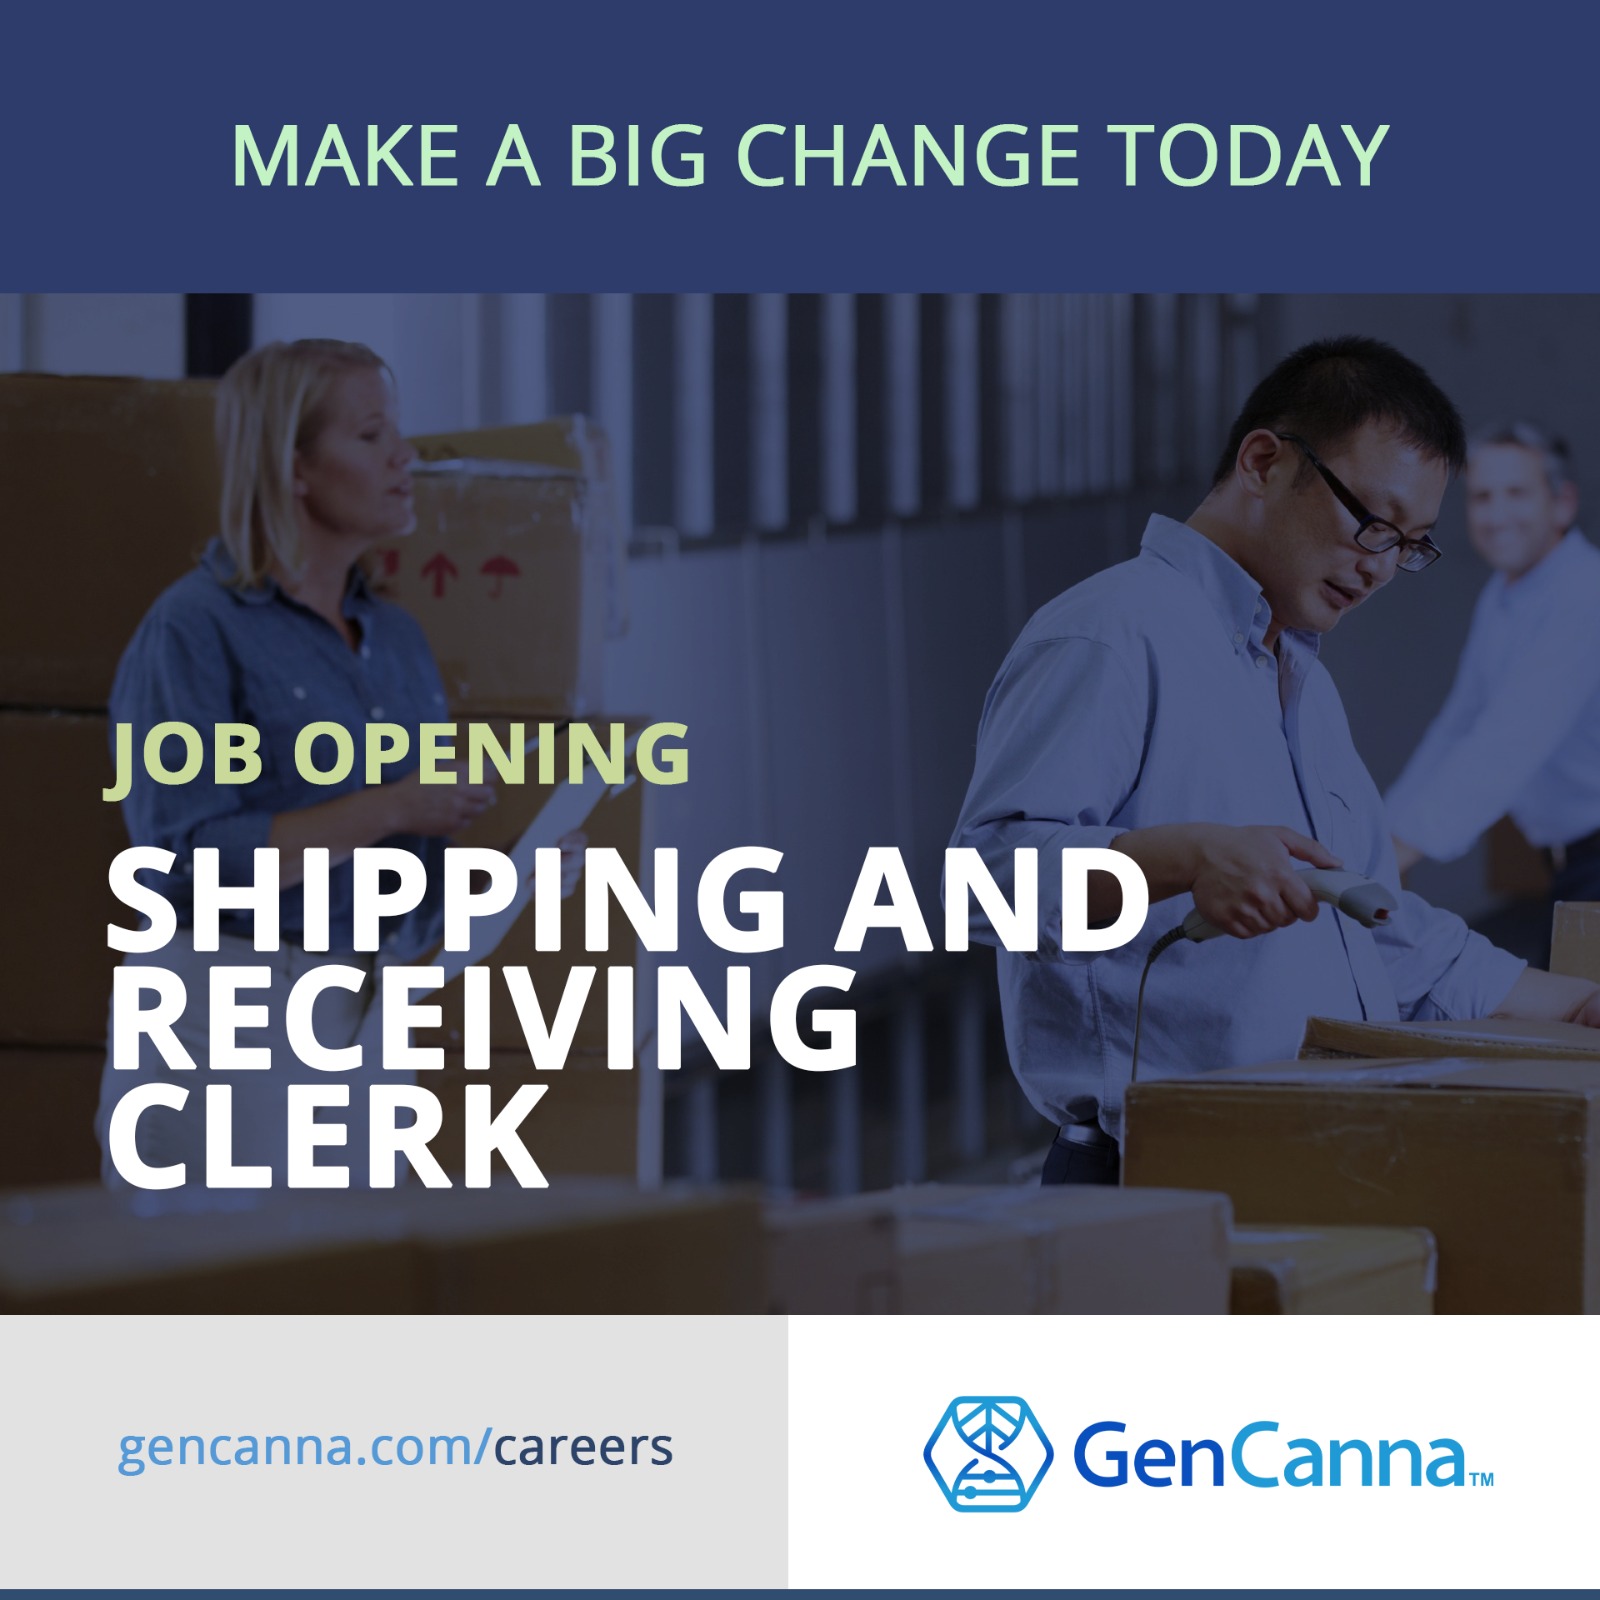 GenCanna is hiring Shipping & Receiving Clerk